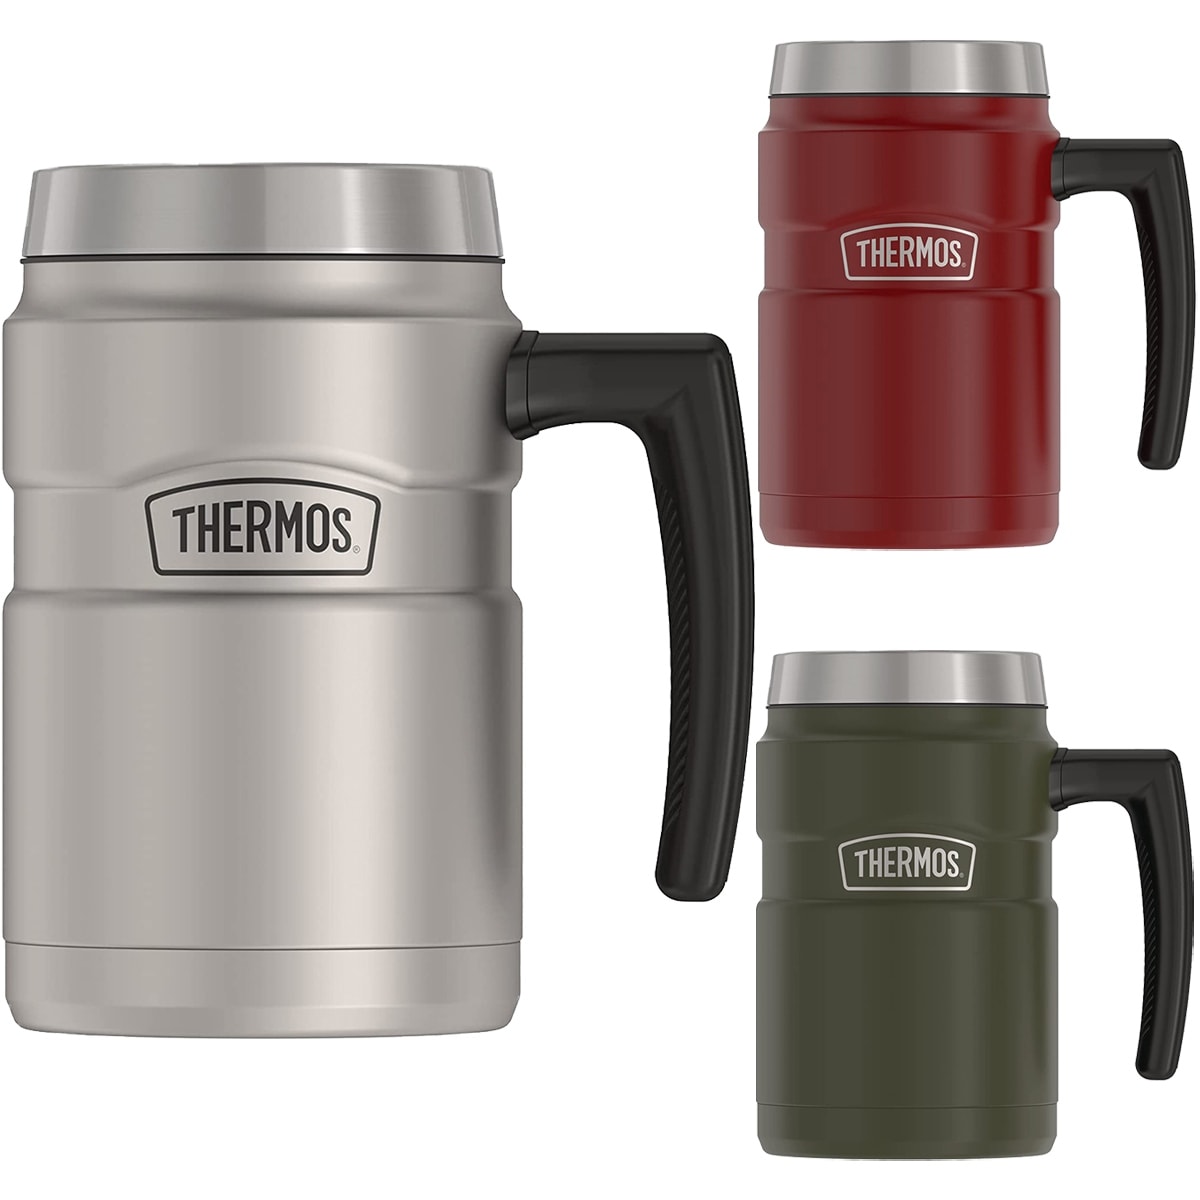 Thermos 16-oz. Stainless Steel Travel Mug